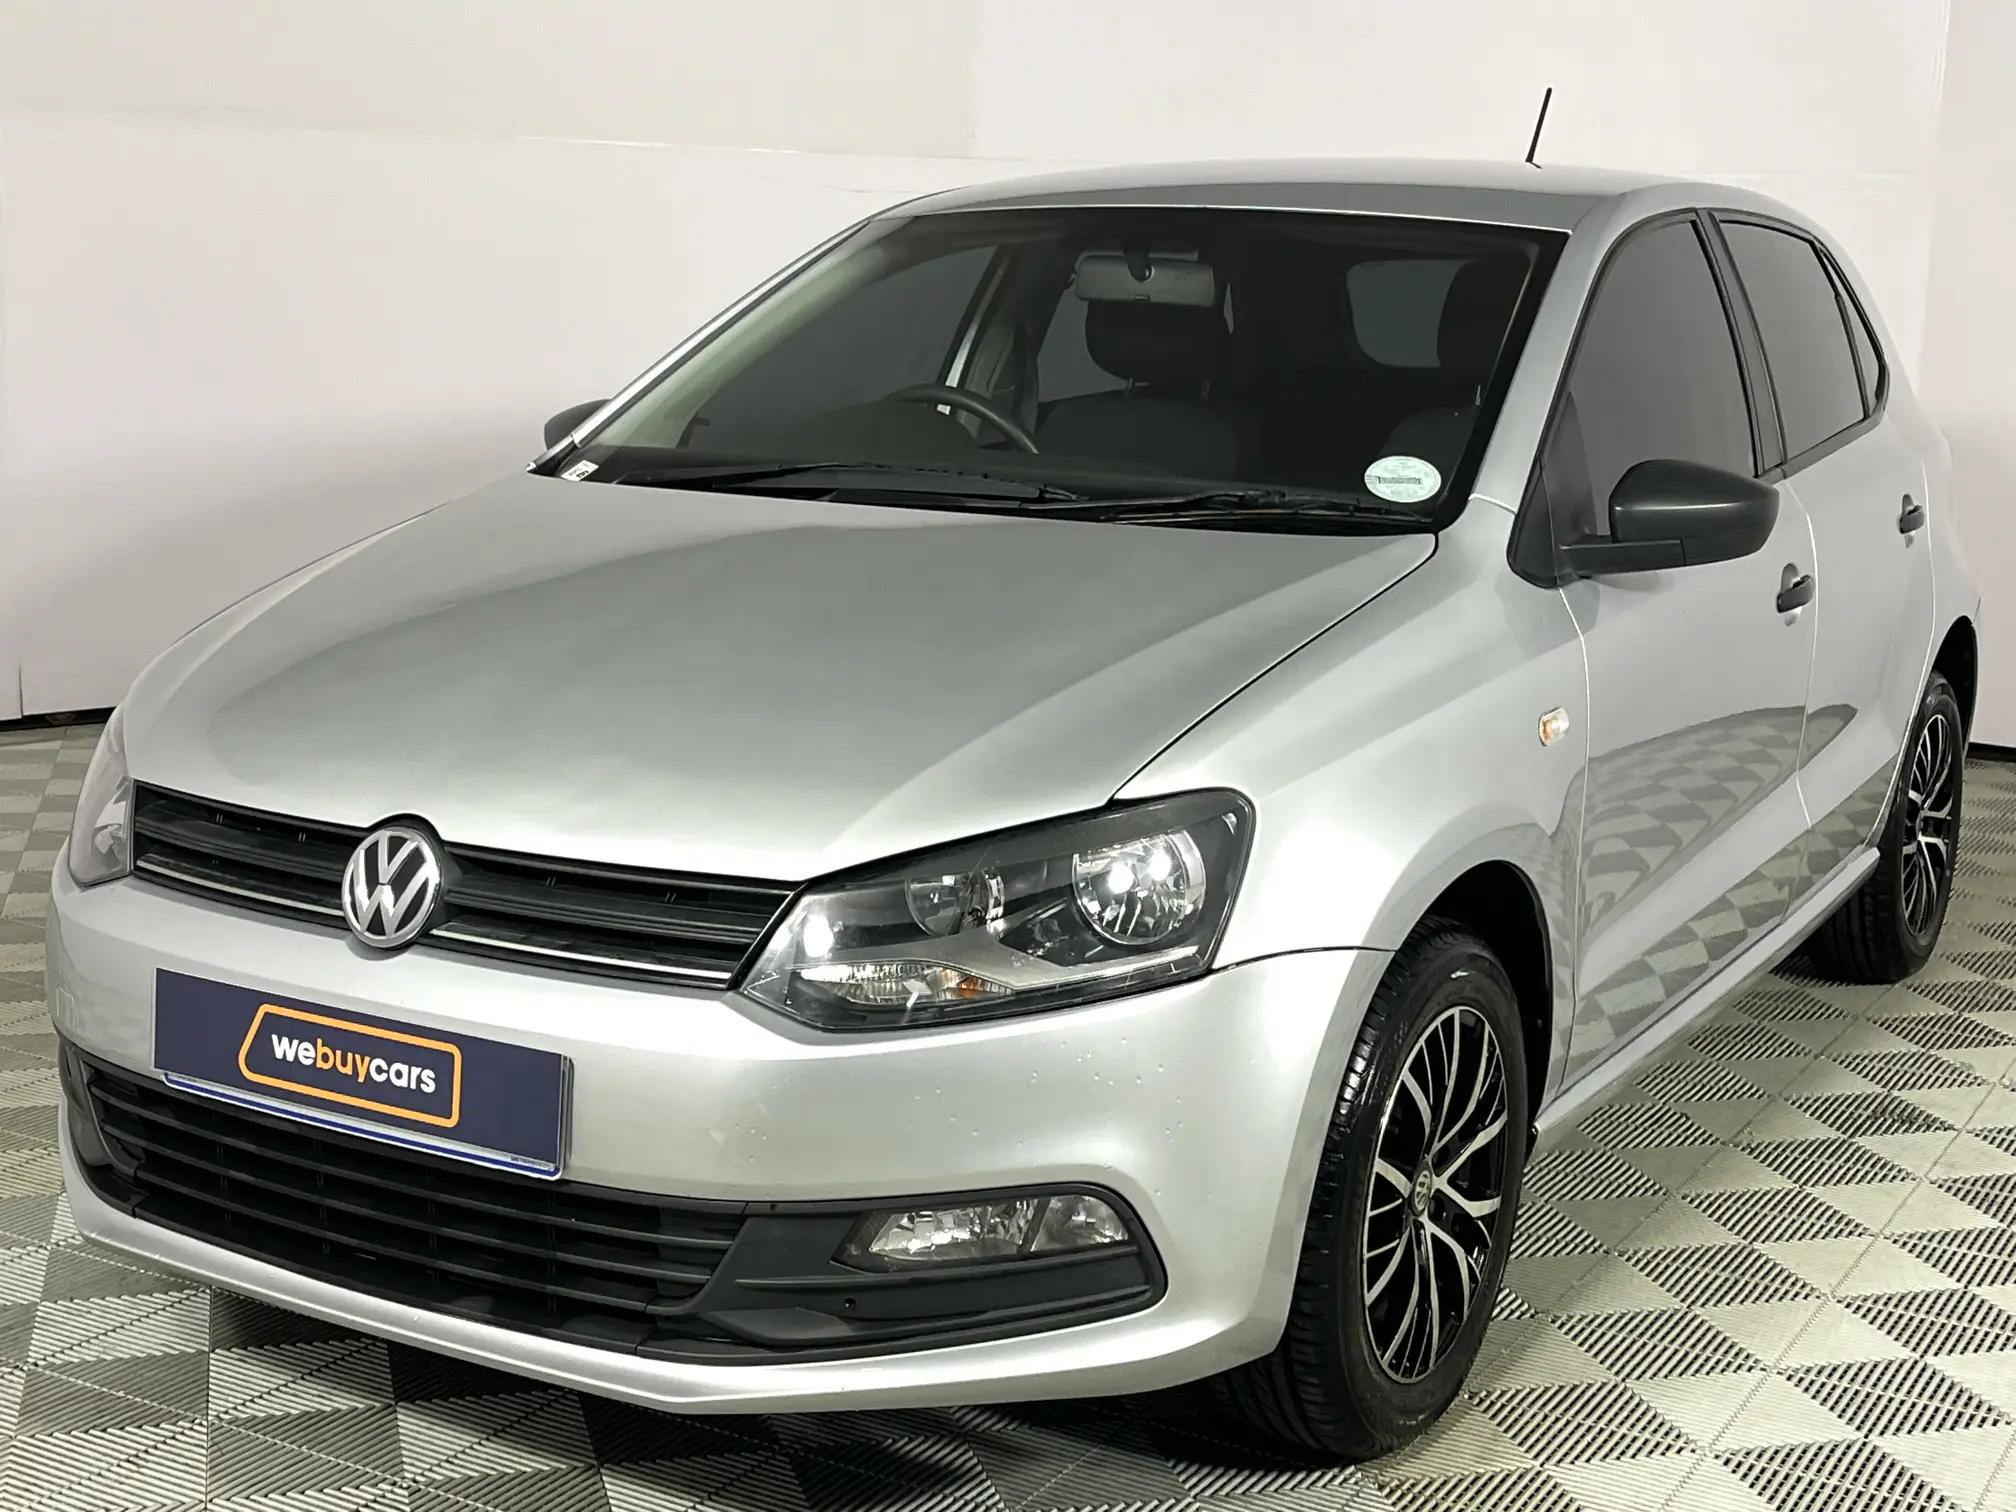 2021 Volkswagen Polo Vivo 1.4 Trendline (5dr)